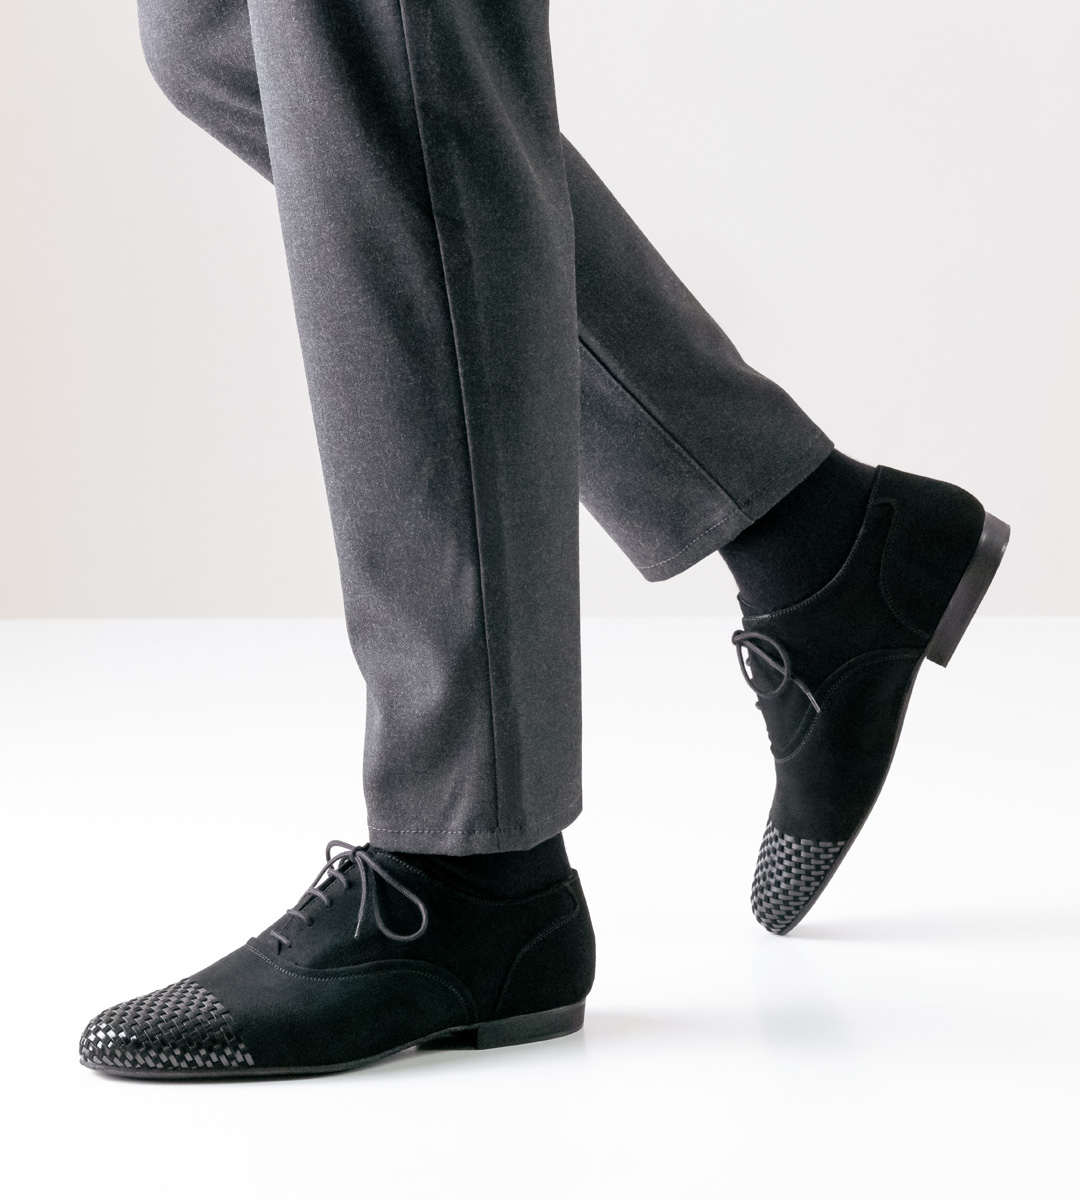 Jeans in black in combination with black Werner Kern men's dance shoe